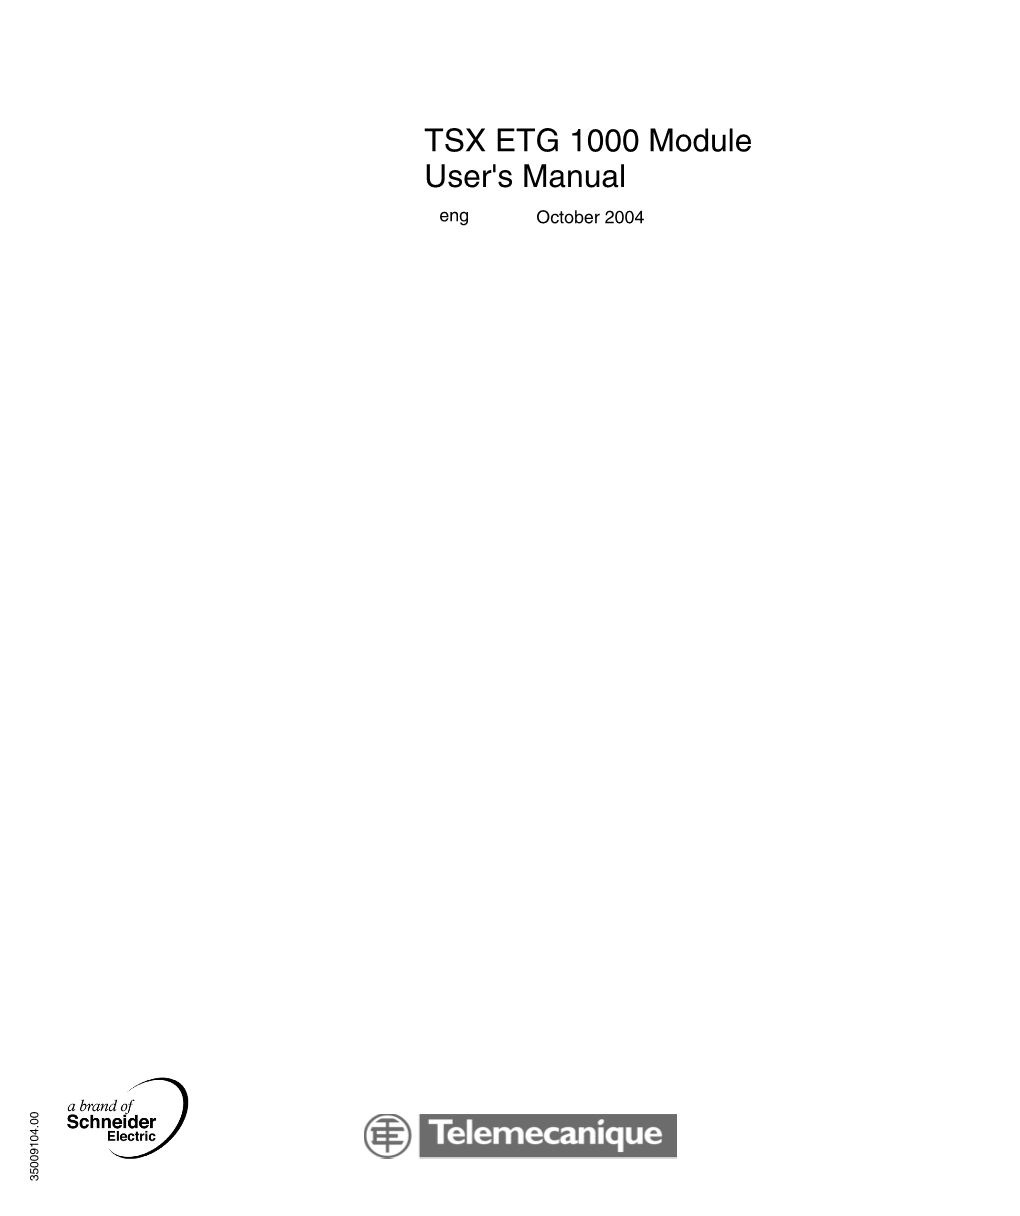 TSX ETG 1000 Module User's Manual